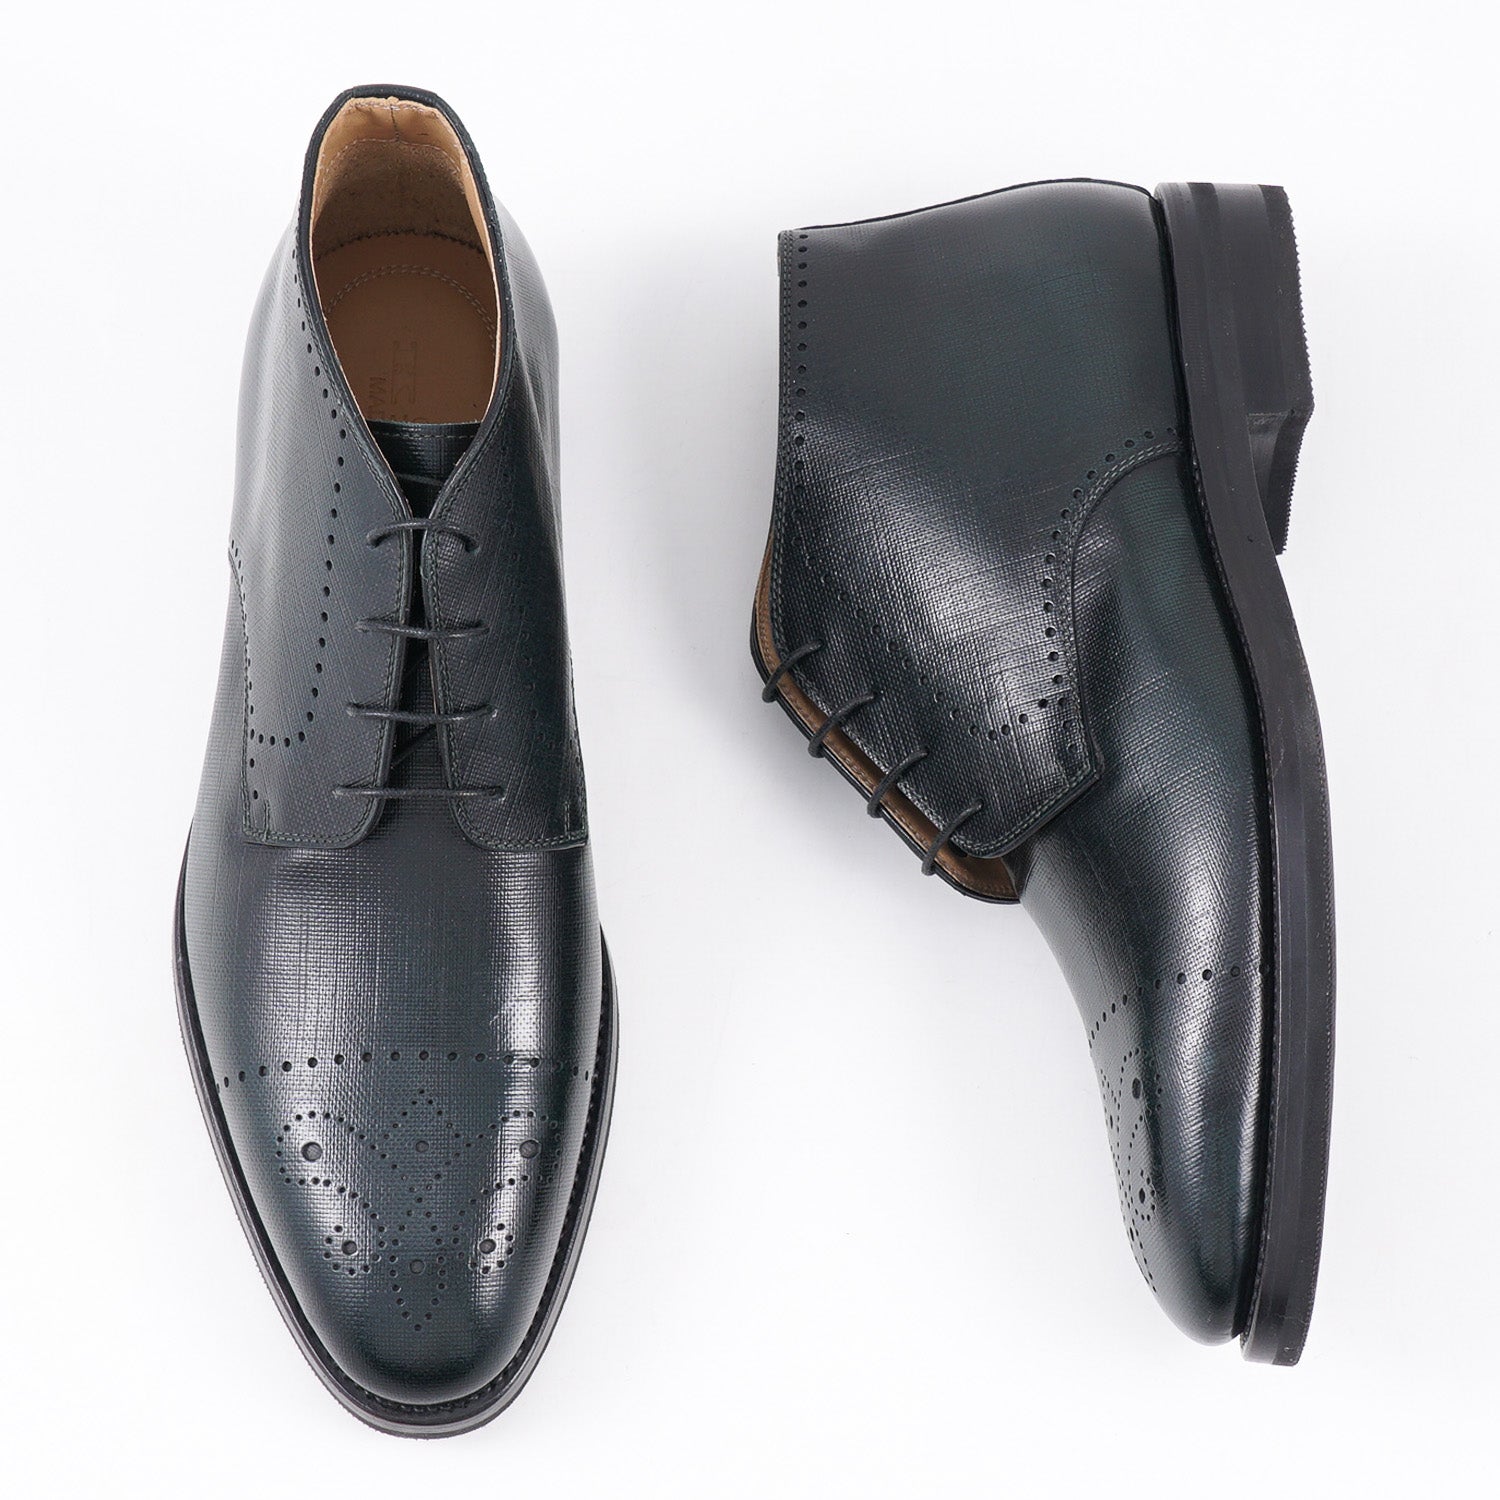 Kiton Saffiano Leather Ankle Boots - Top Shelf Apparel